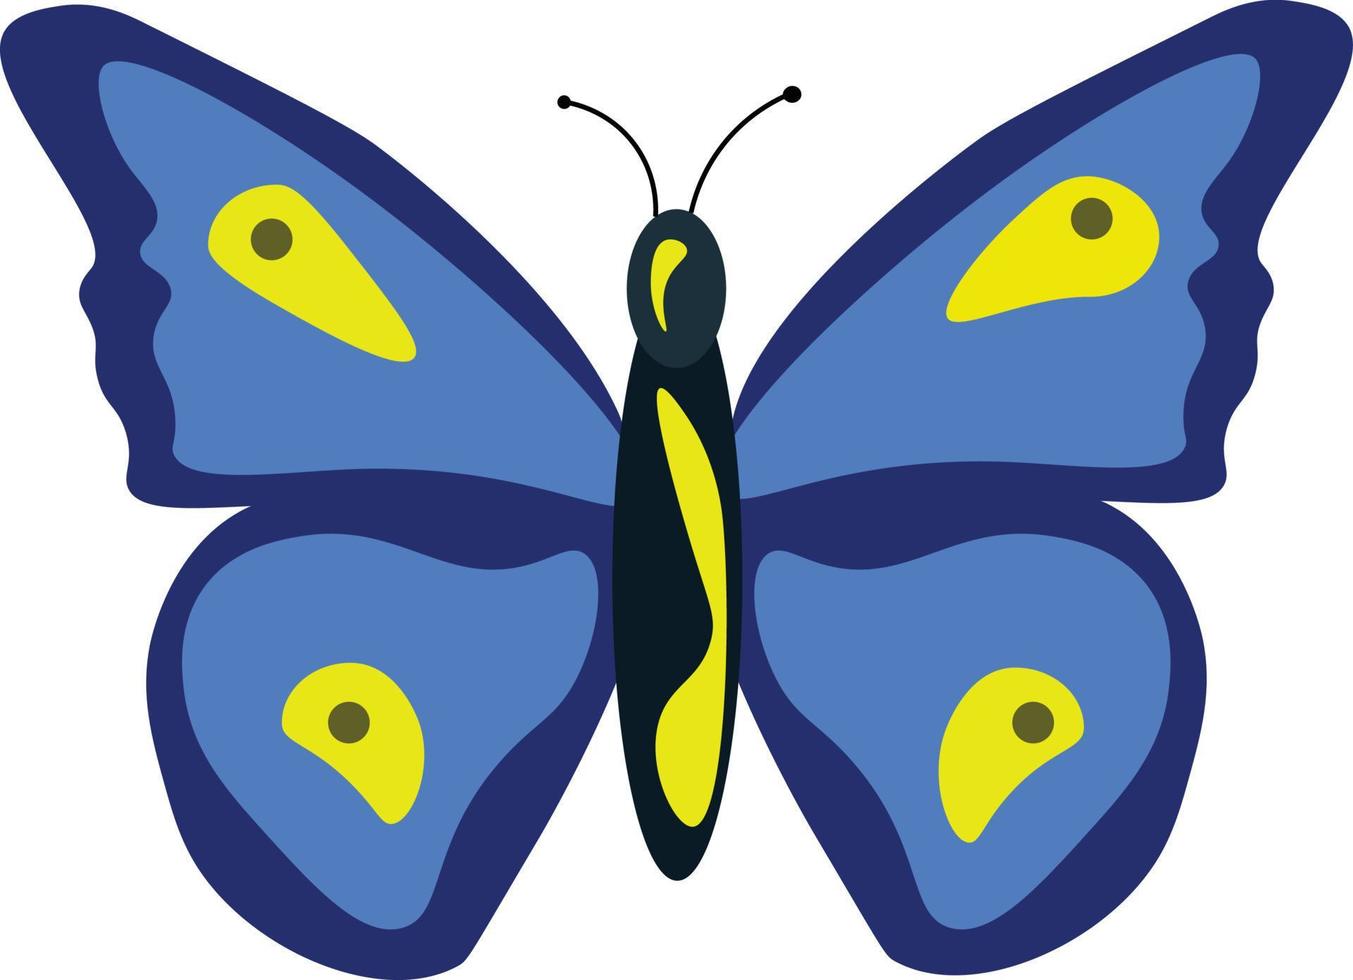 mariposa azul, ilustración, vector sobre fondo blanco.